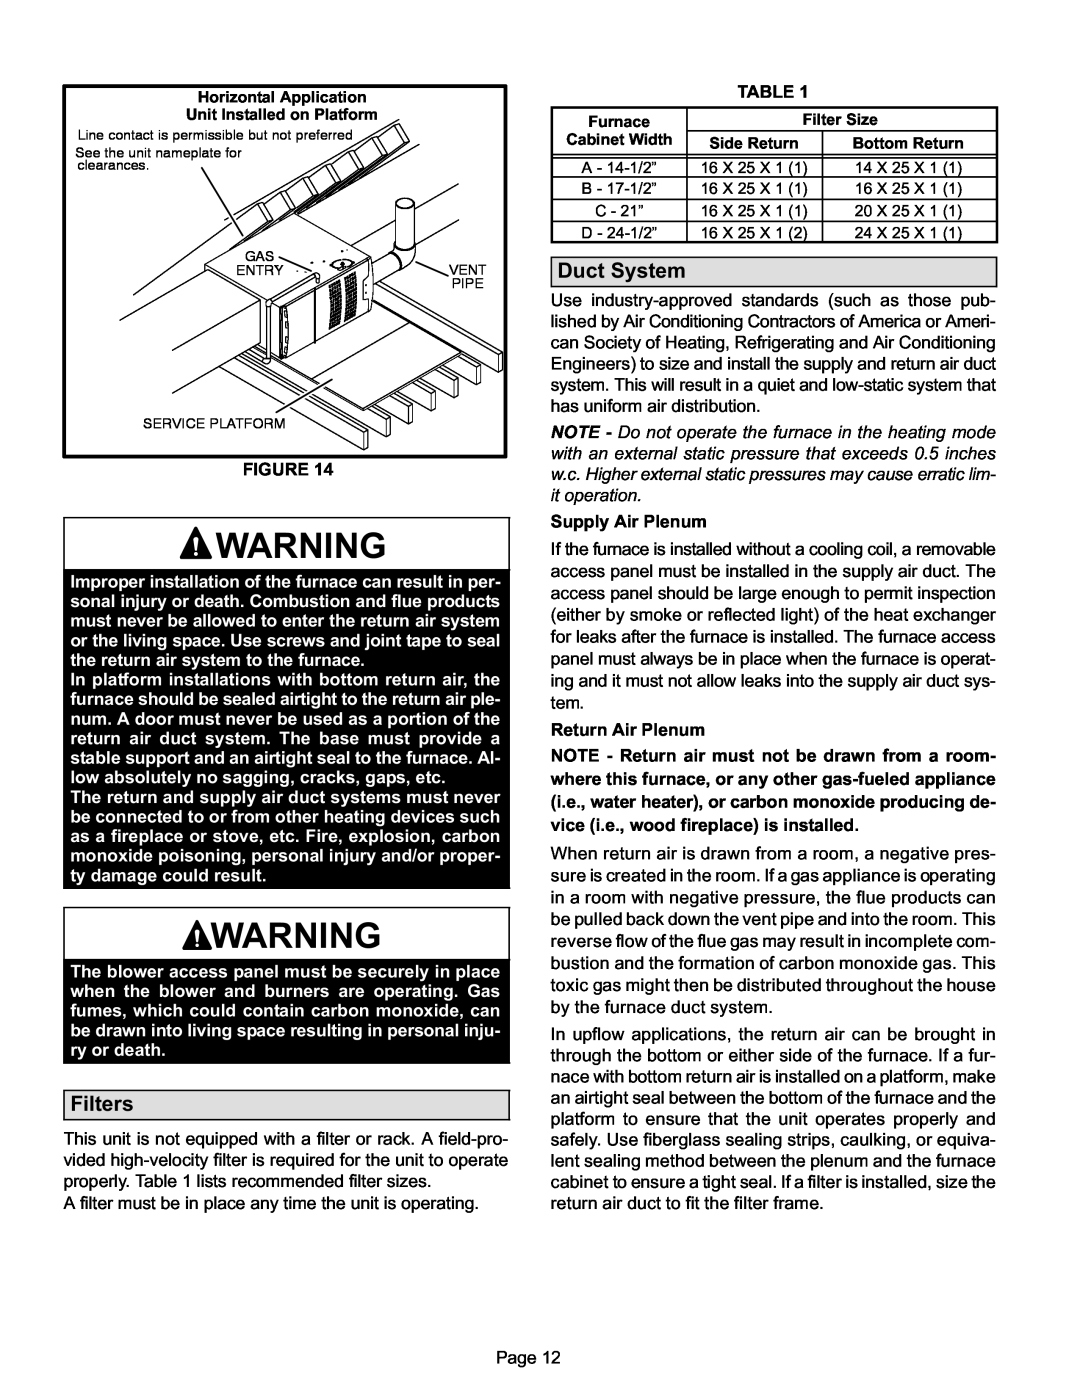 Lennox International Inc Merit Series Gas Furnace installation instructions Filters, Duct System 